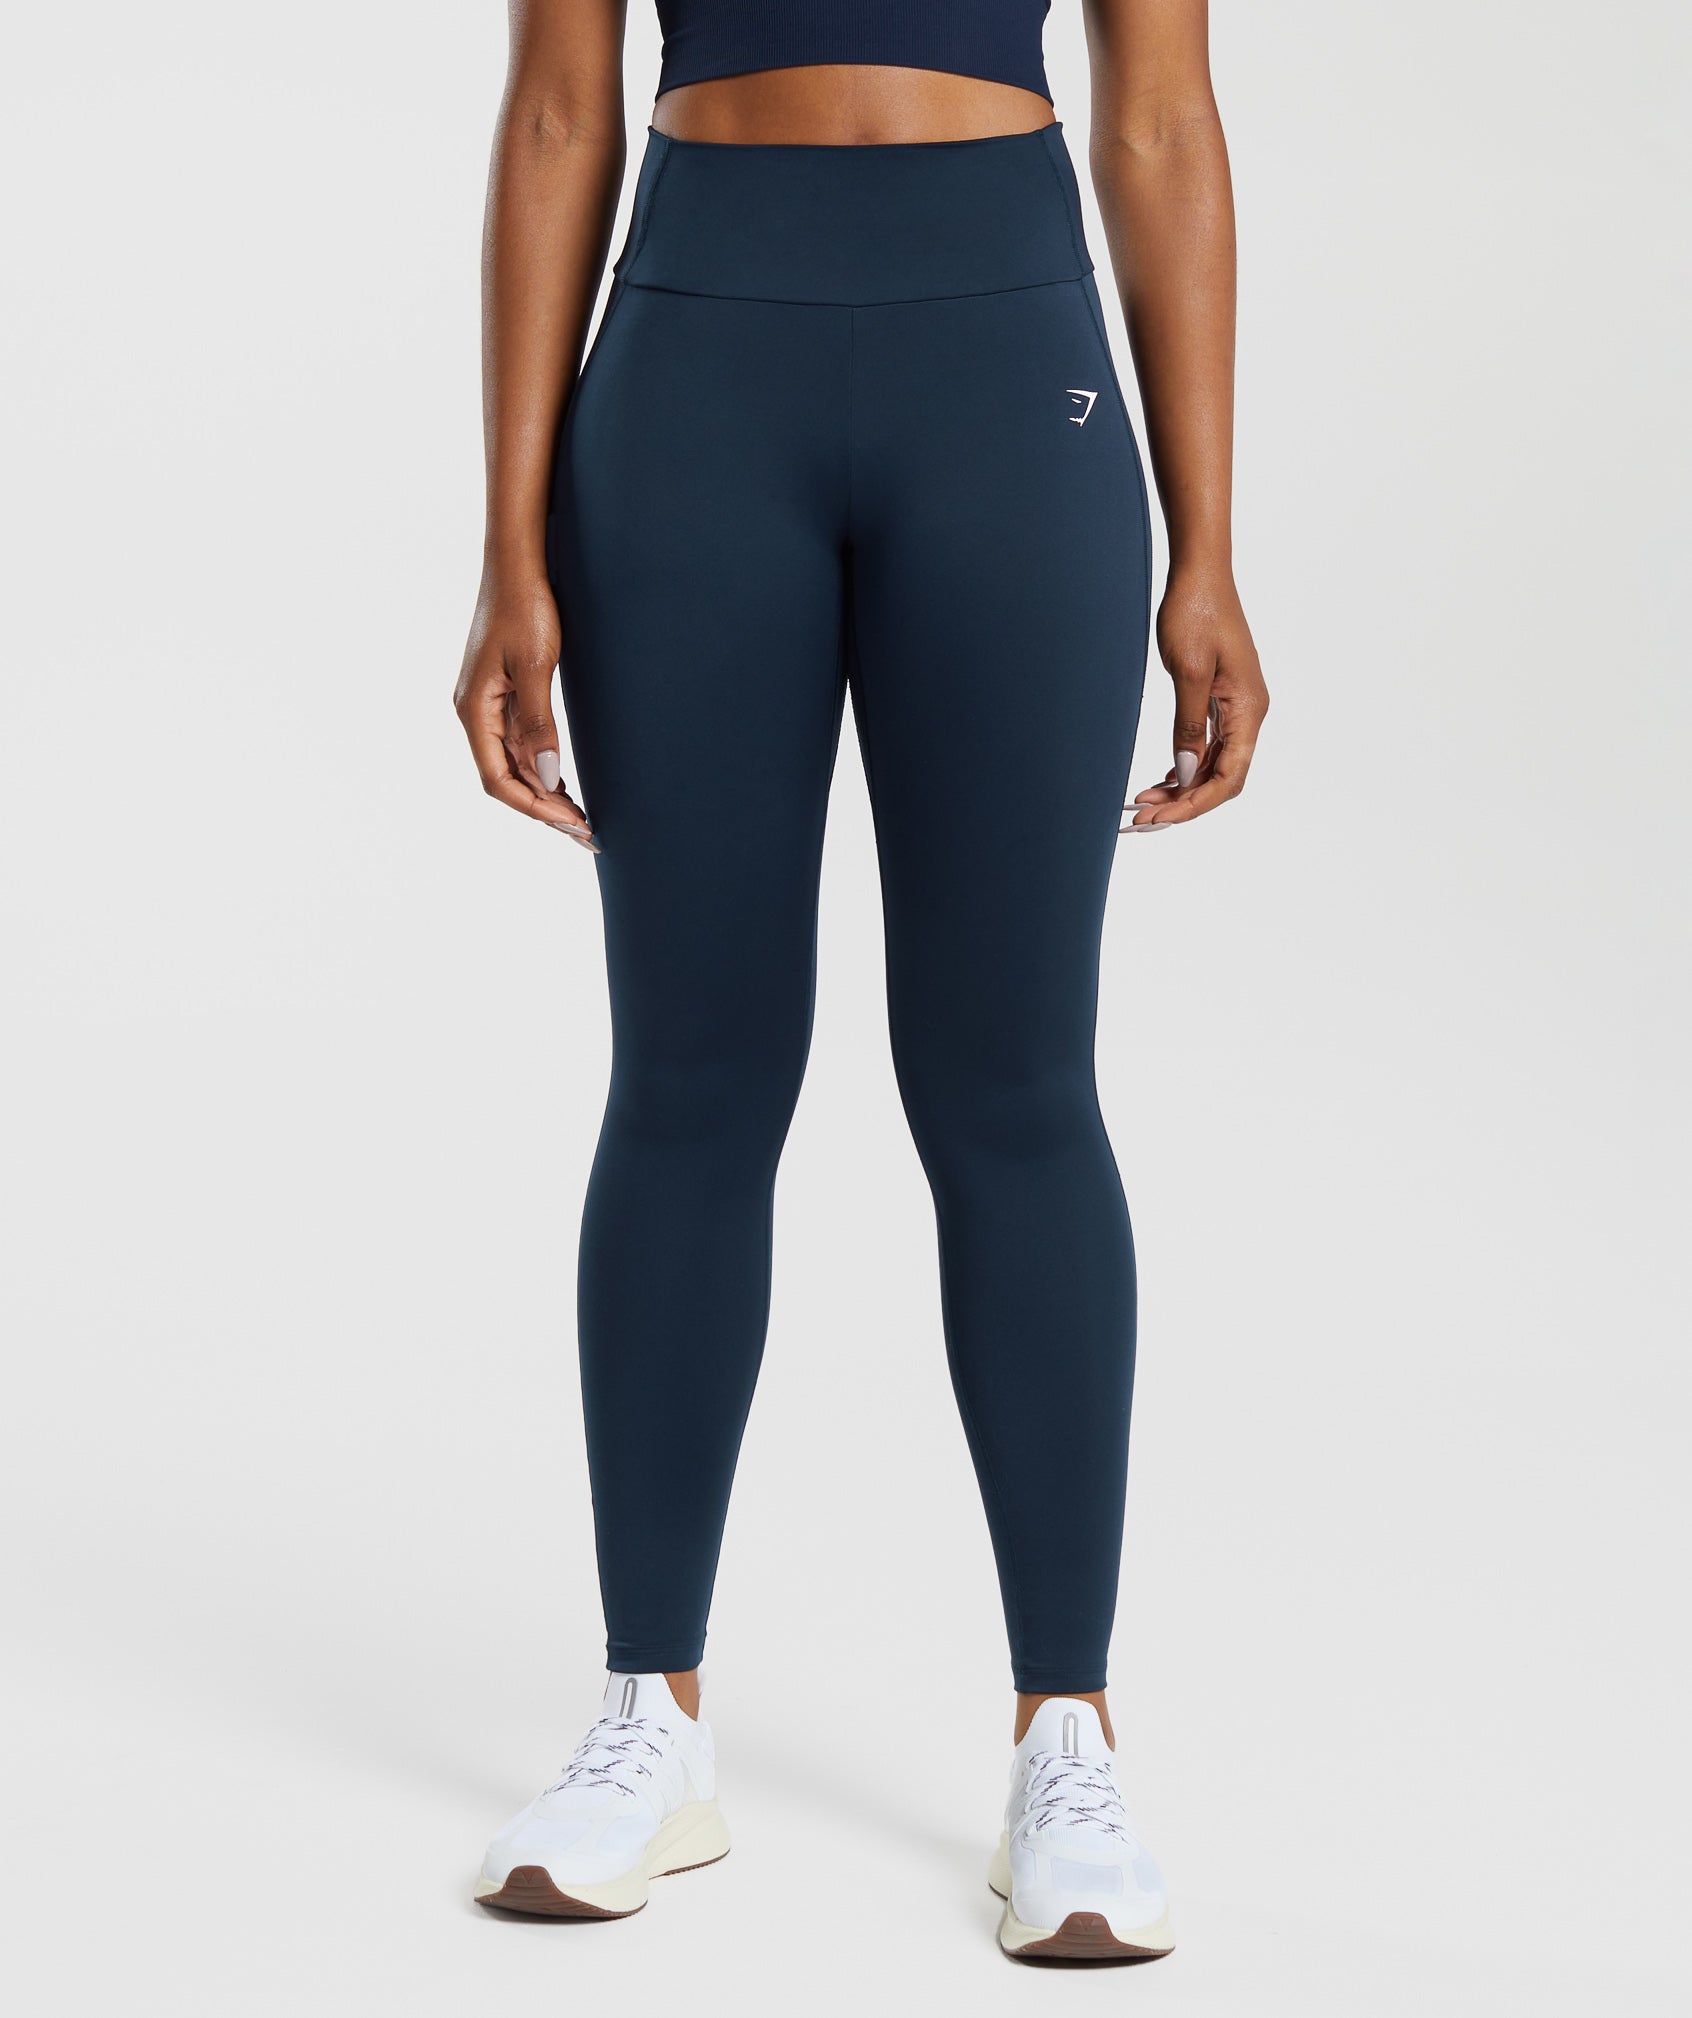 Women’s Gymshark Leggings Joggers Pants Navy Blue Elastic Waist Size Large